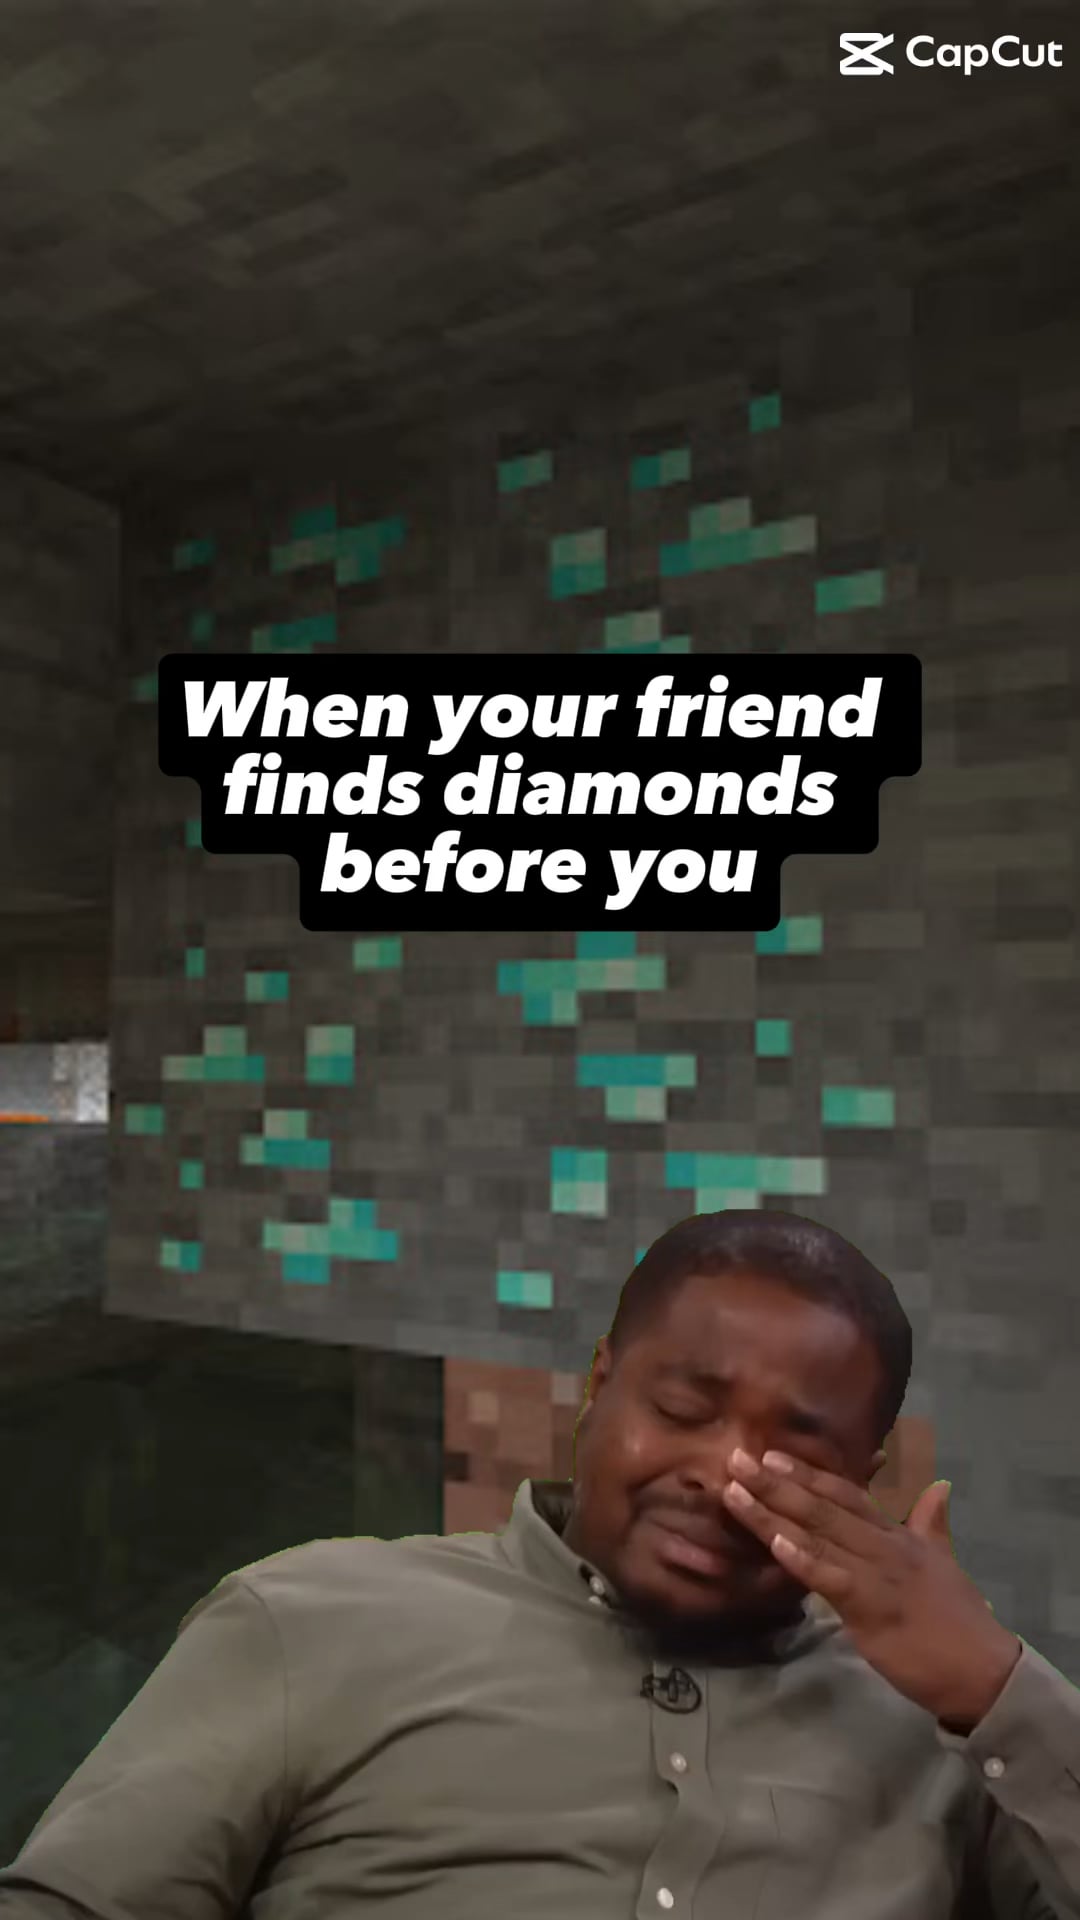 Minecraft Memes - "Diamonds: A Friend's Discovery"